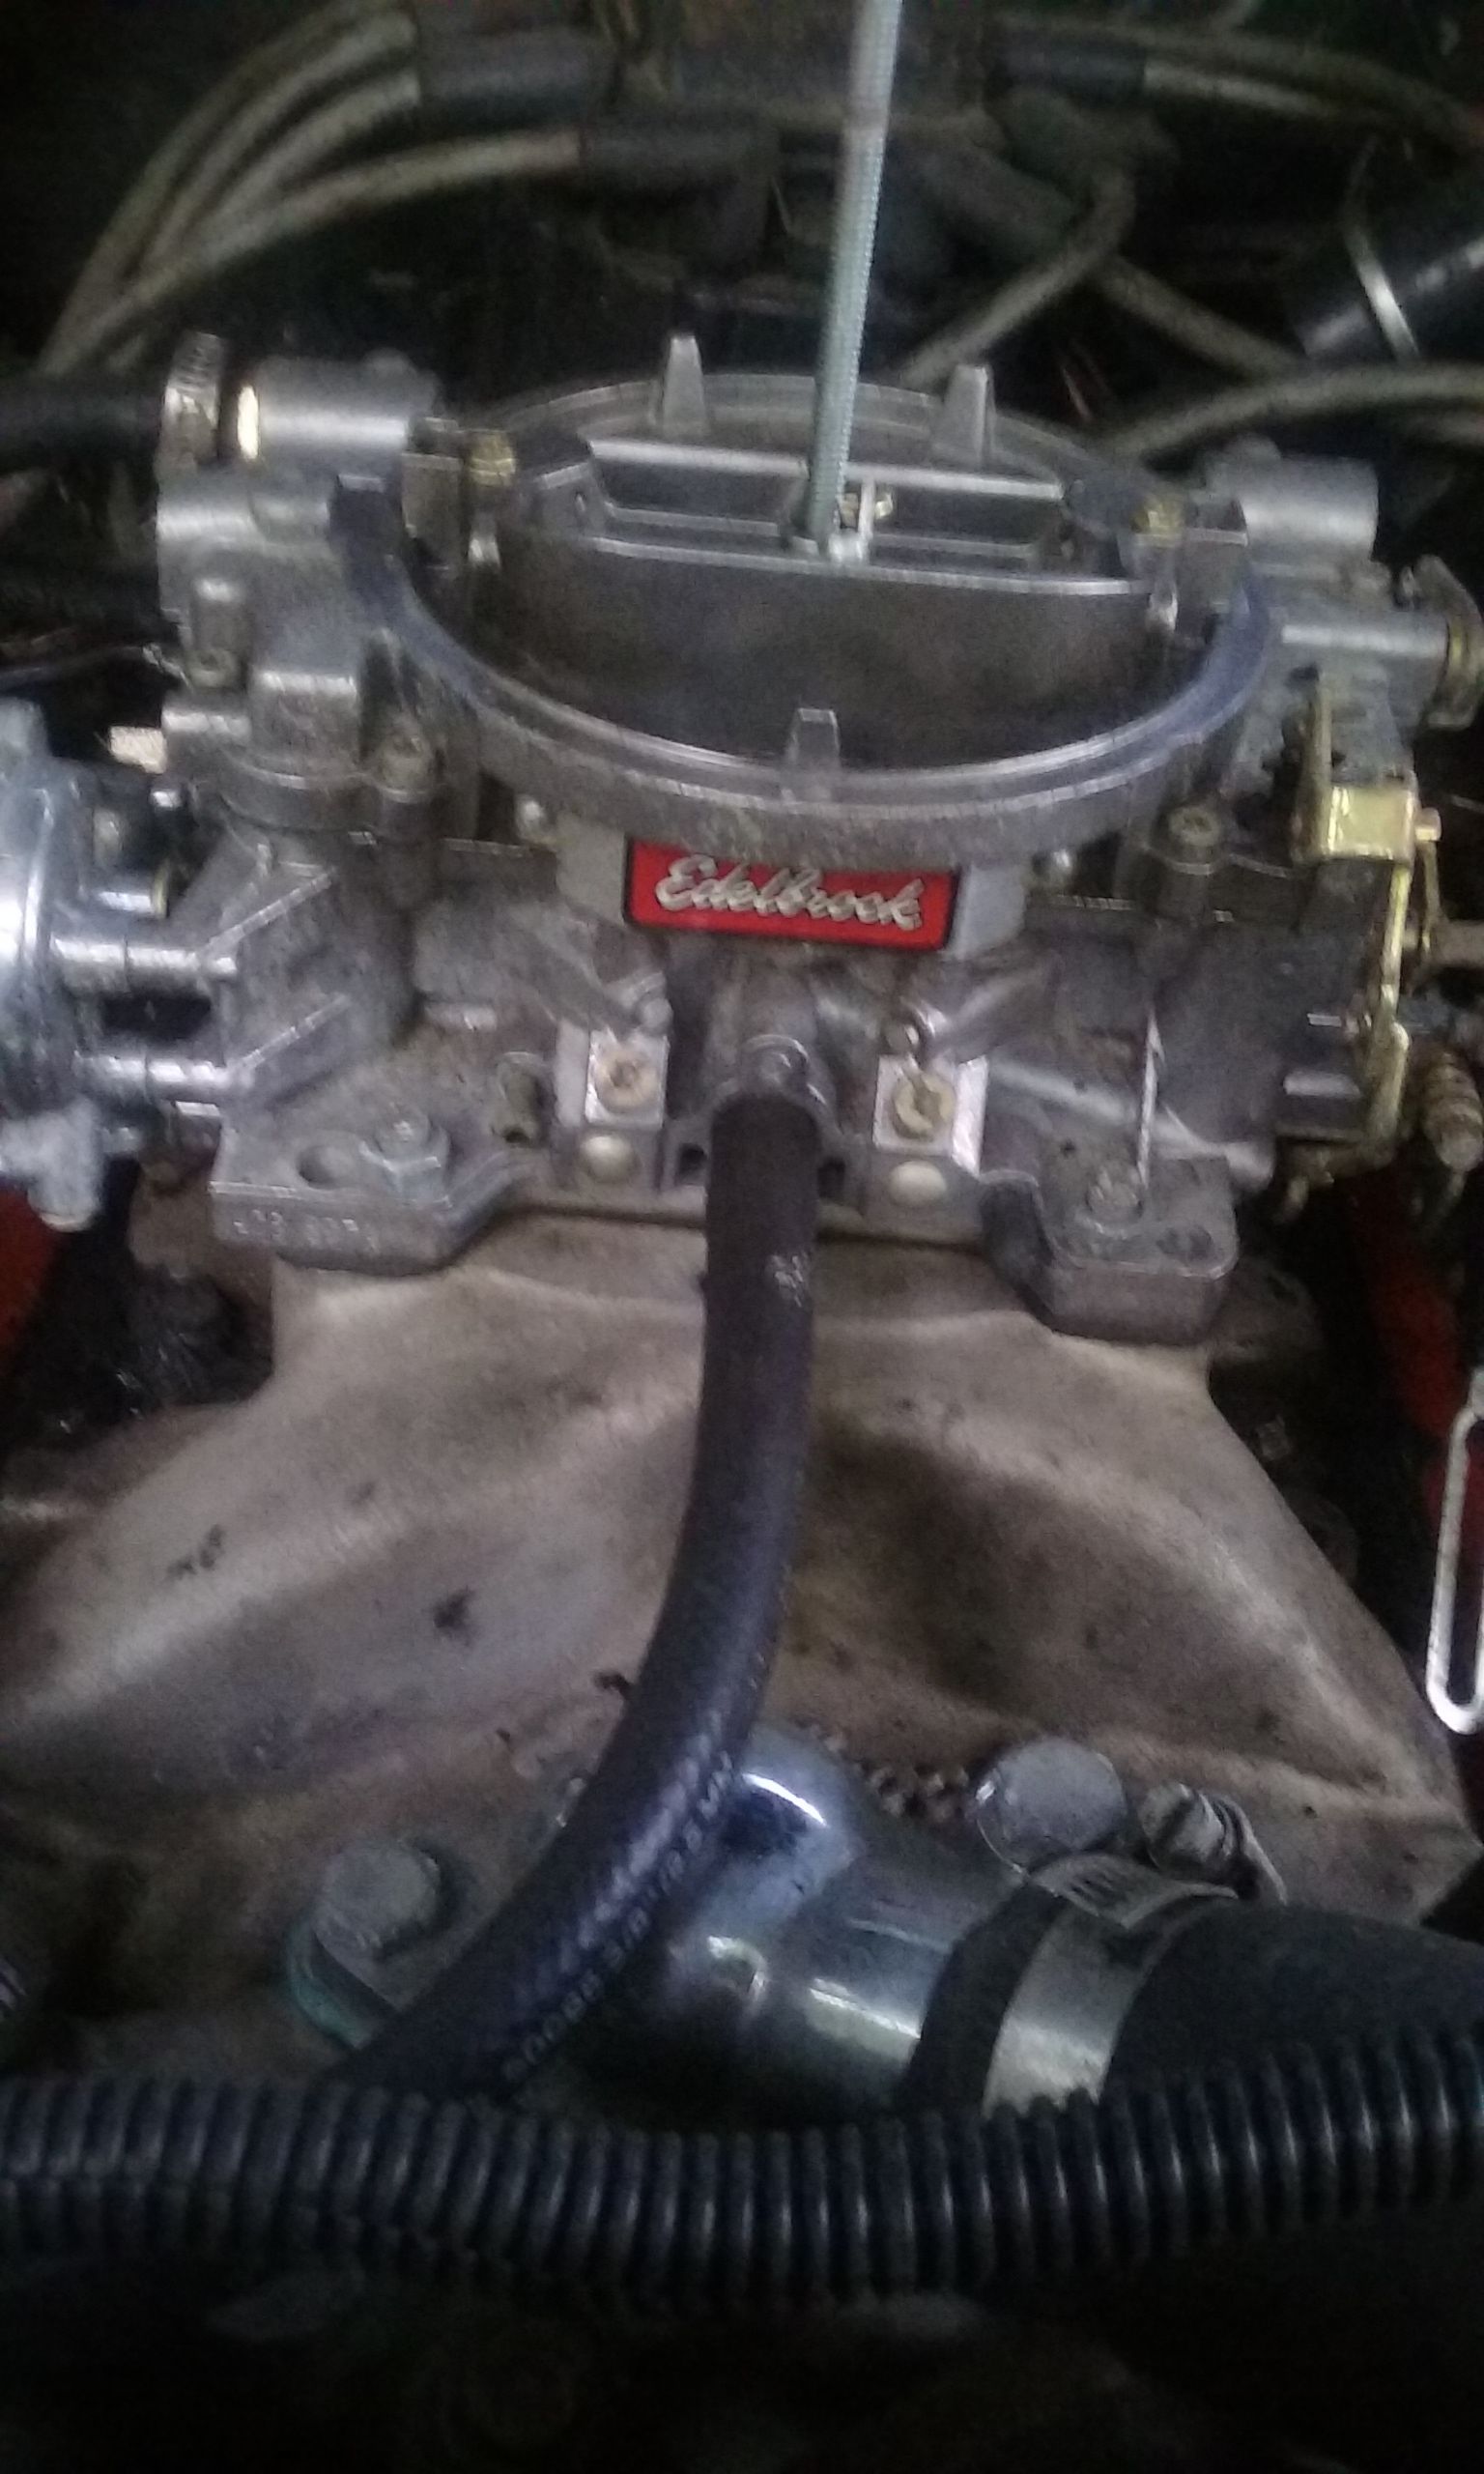 Eldabrock intake and carburetor